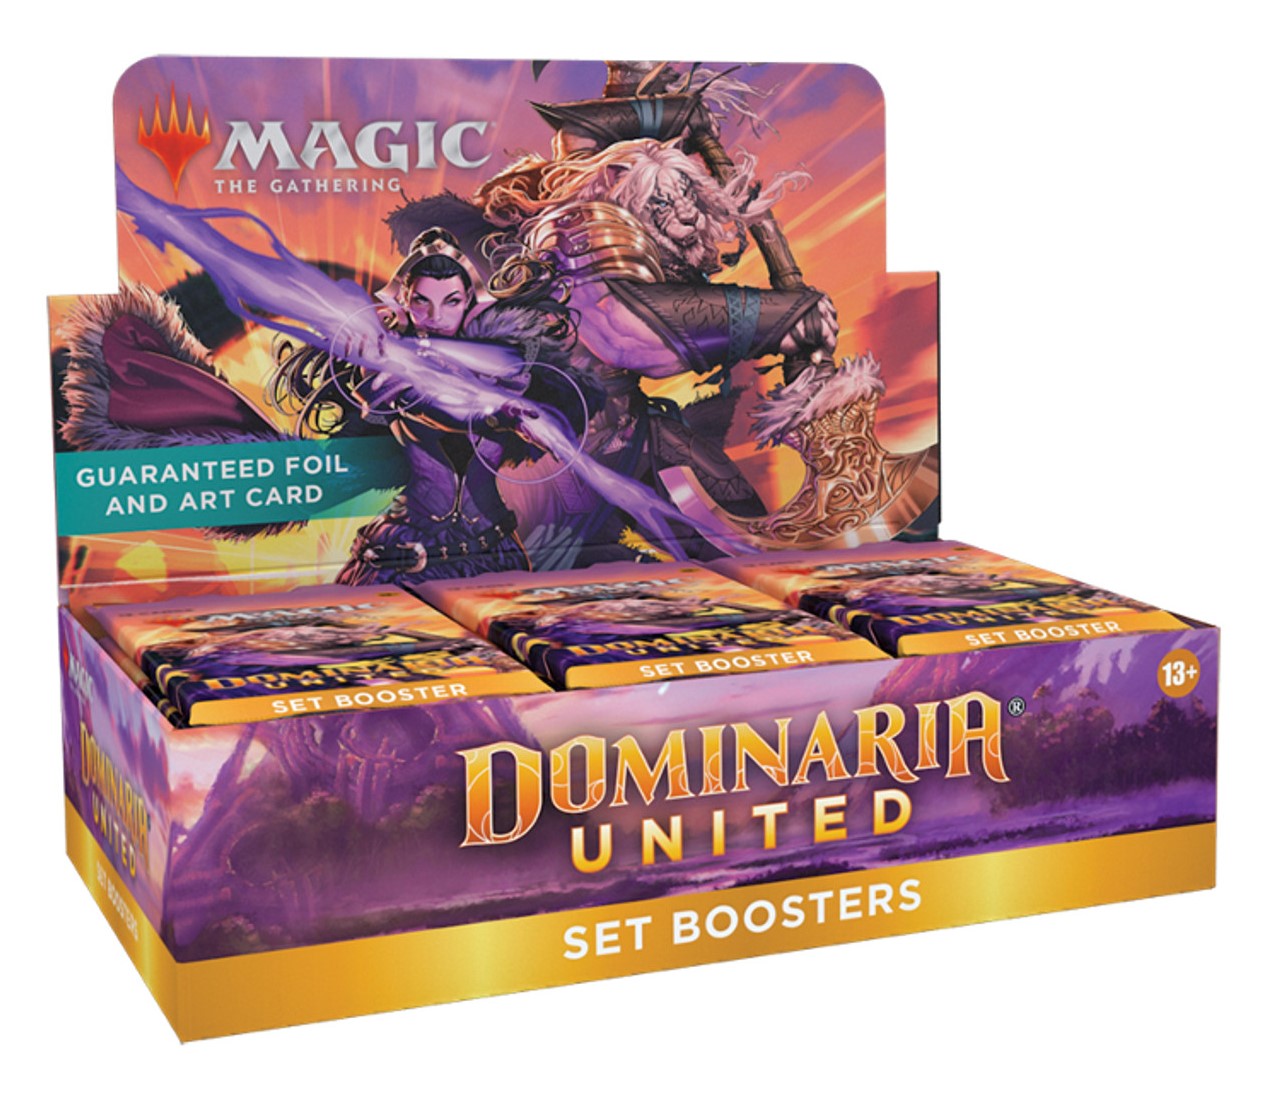 Magic: The Gathering - Dominaria United Set Booster Box